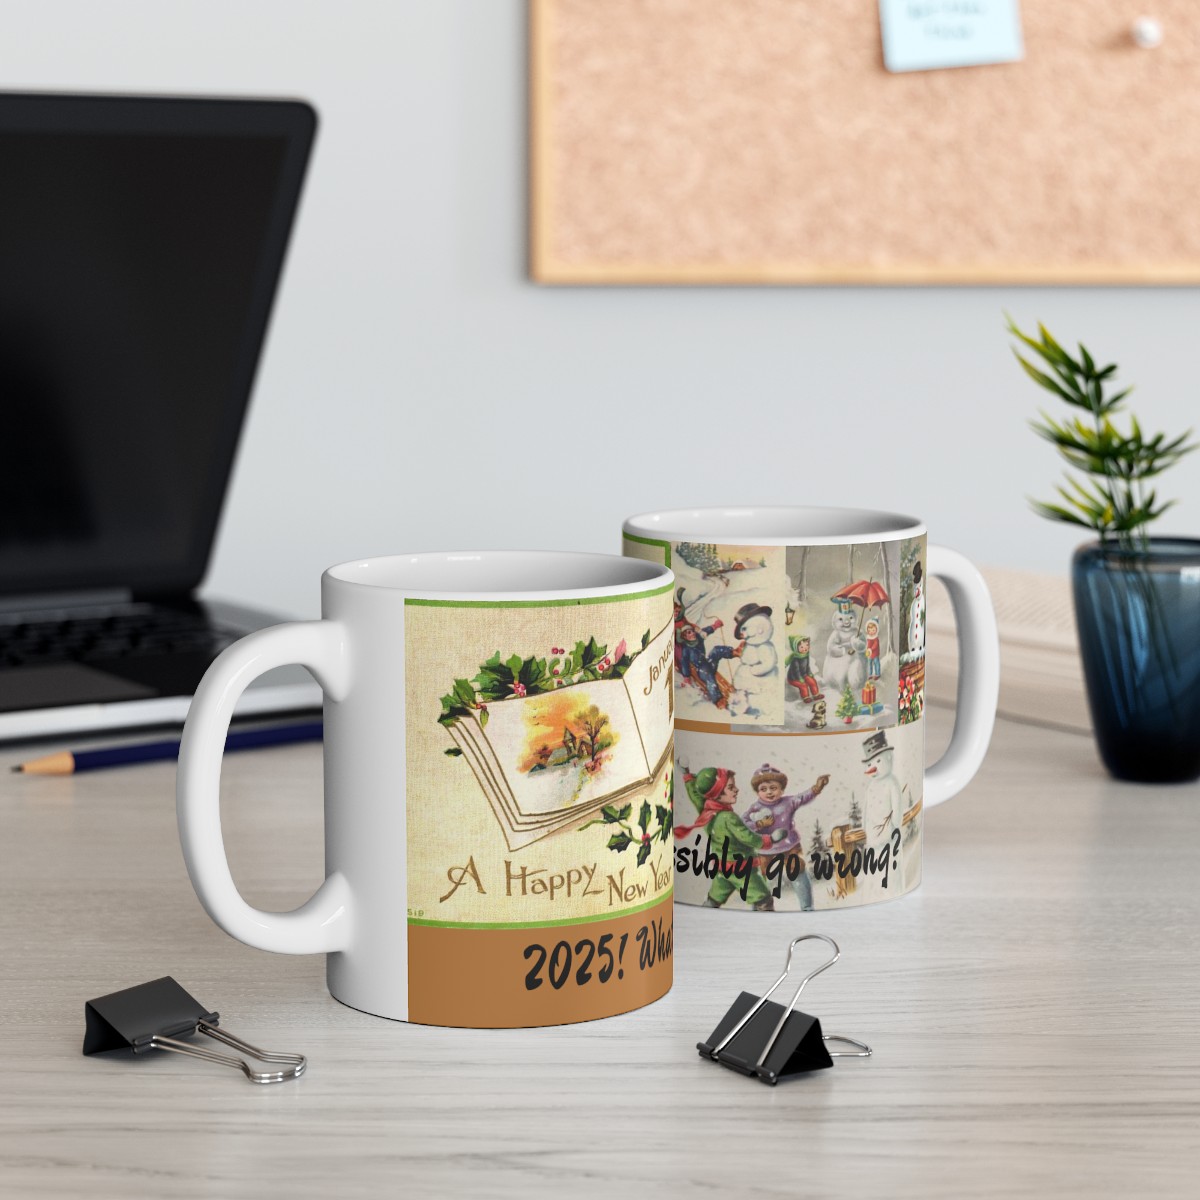 2025! What Could Possibly Go Wrong?  - Ceramic Postcard Mug product thumbnail image